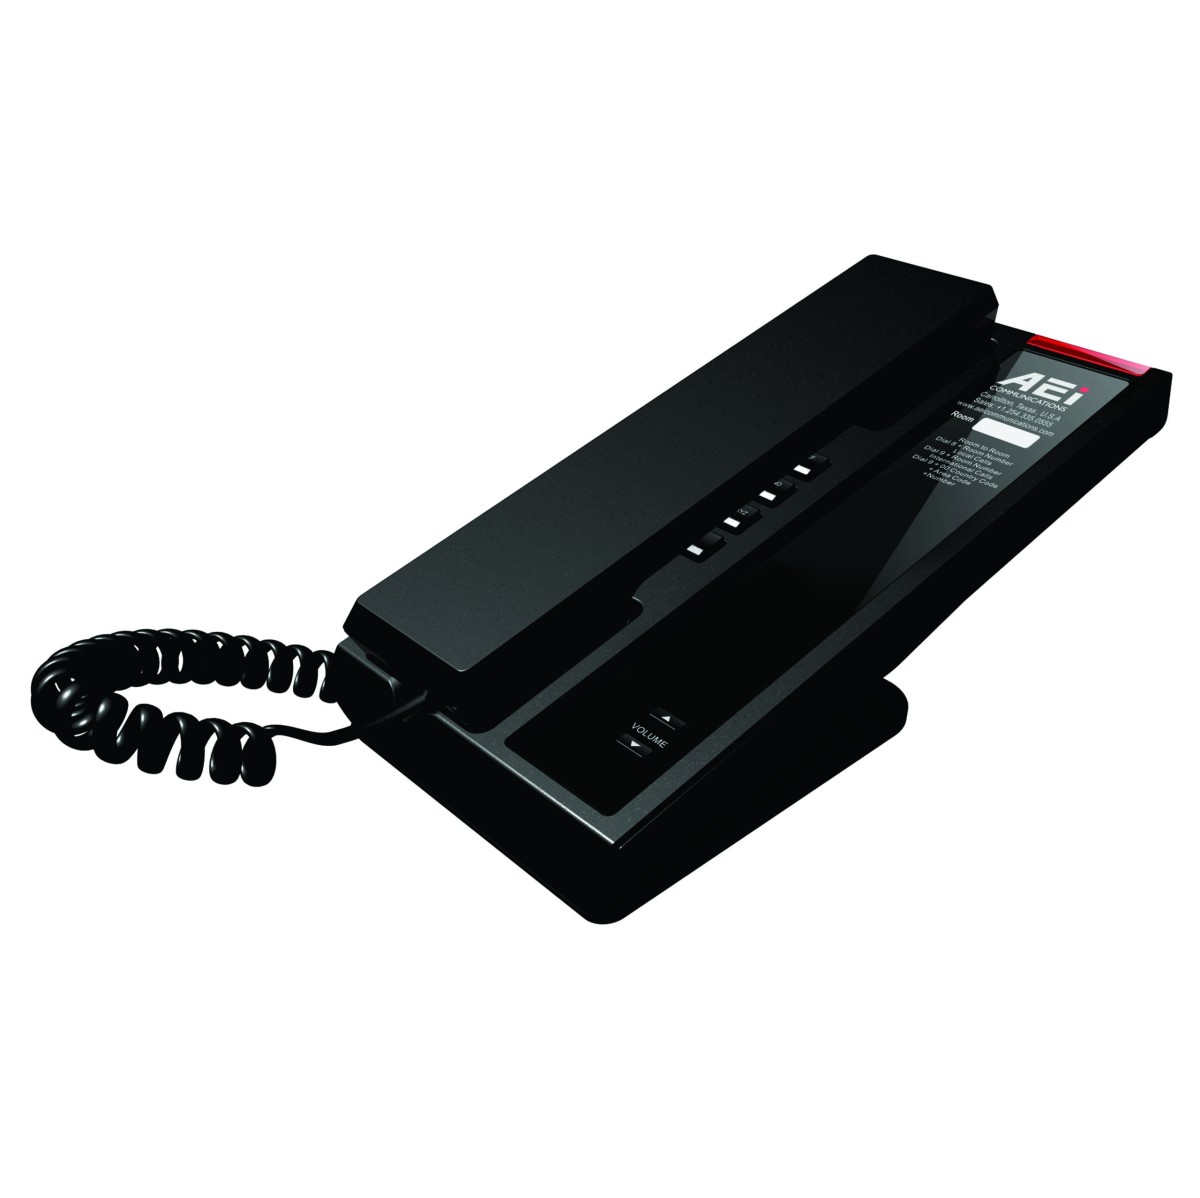 AEI ALN-5100 Slim Single-Line Analog Corded Telephone